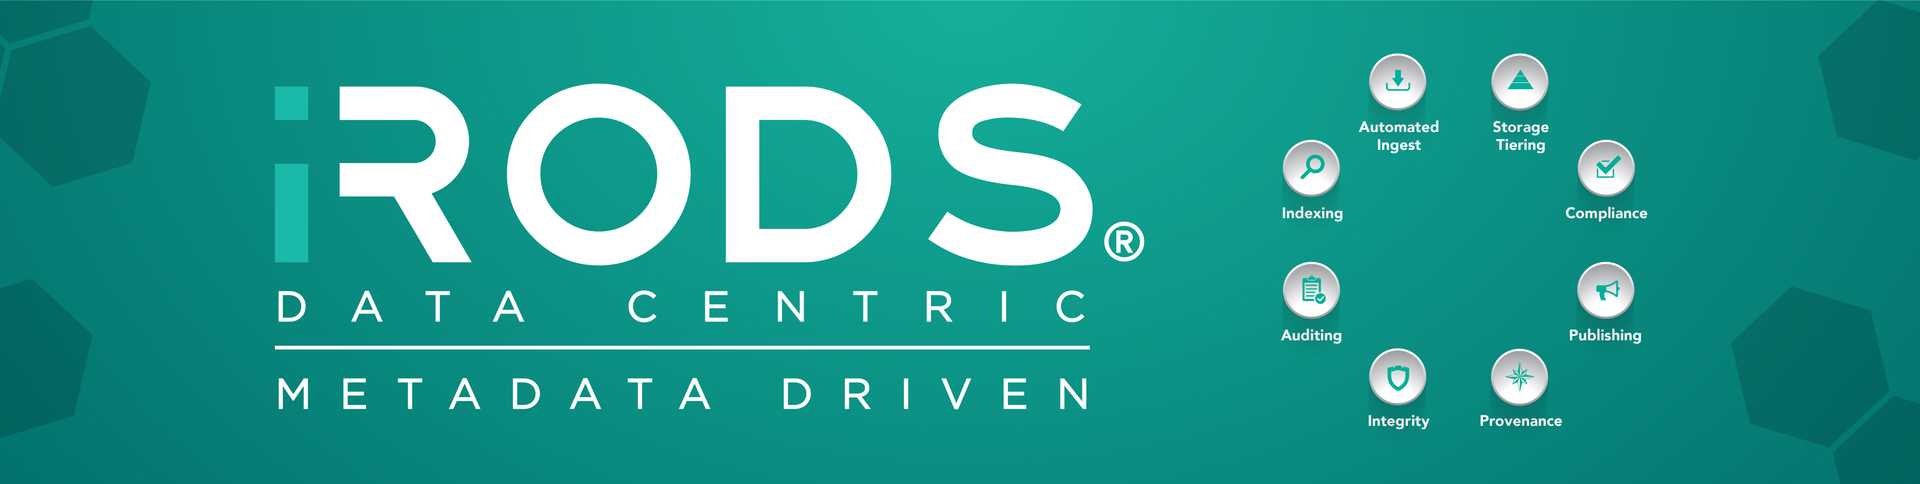 iRODS - Data Centric, Metadata Driven